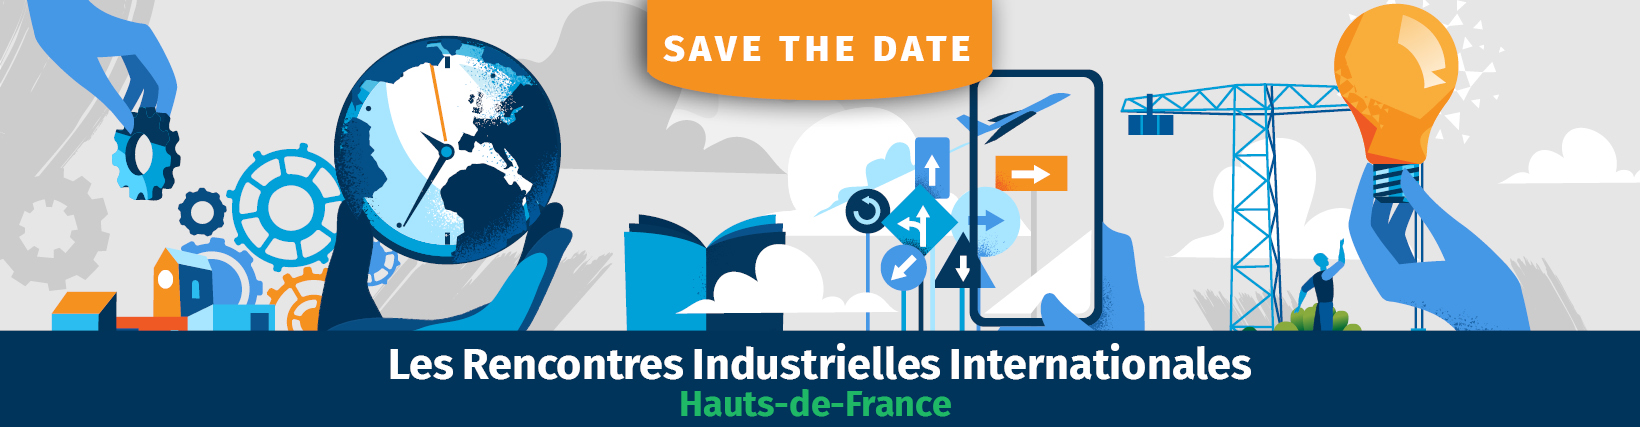 Rencontres Industrielles Internationales Hauts-de-France